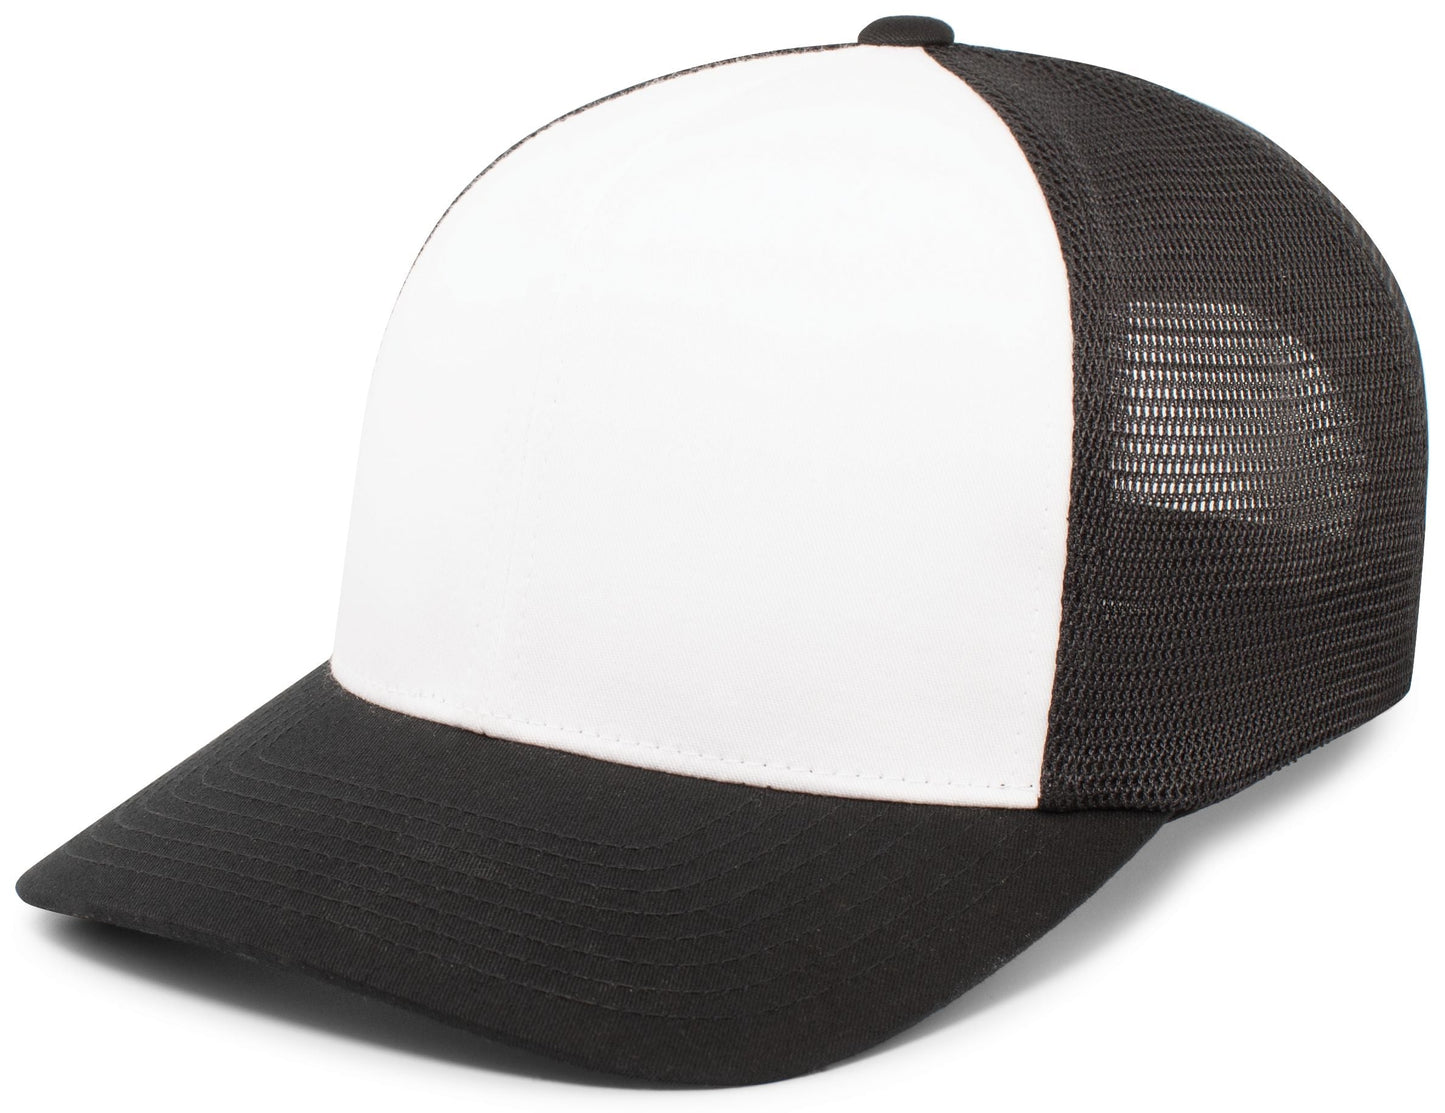 PACIFIC HEADWEAR - TRUCKER PACFLEX SNAPBACK CAP